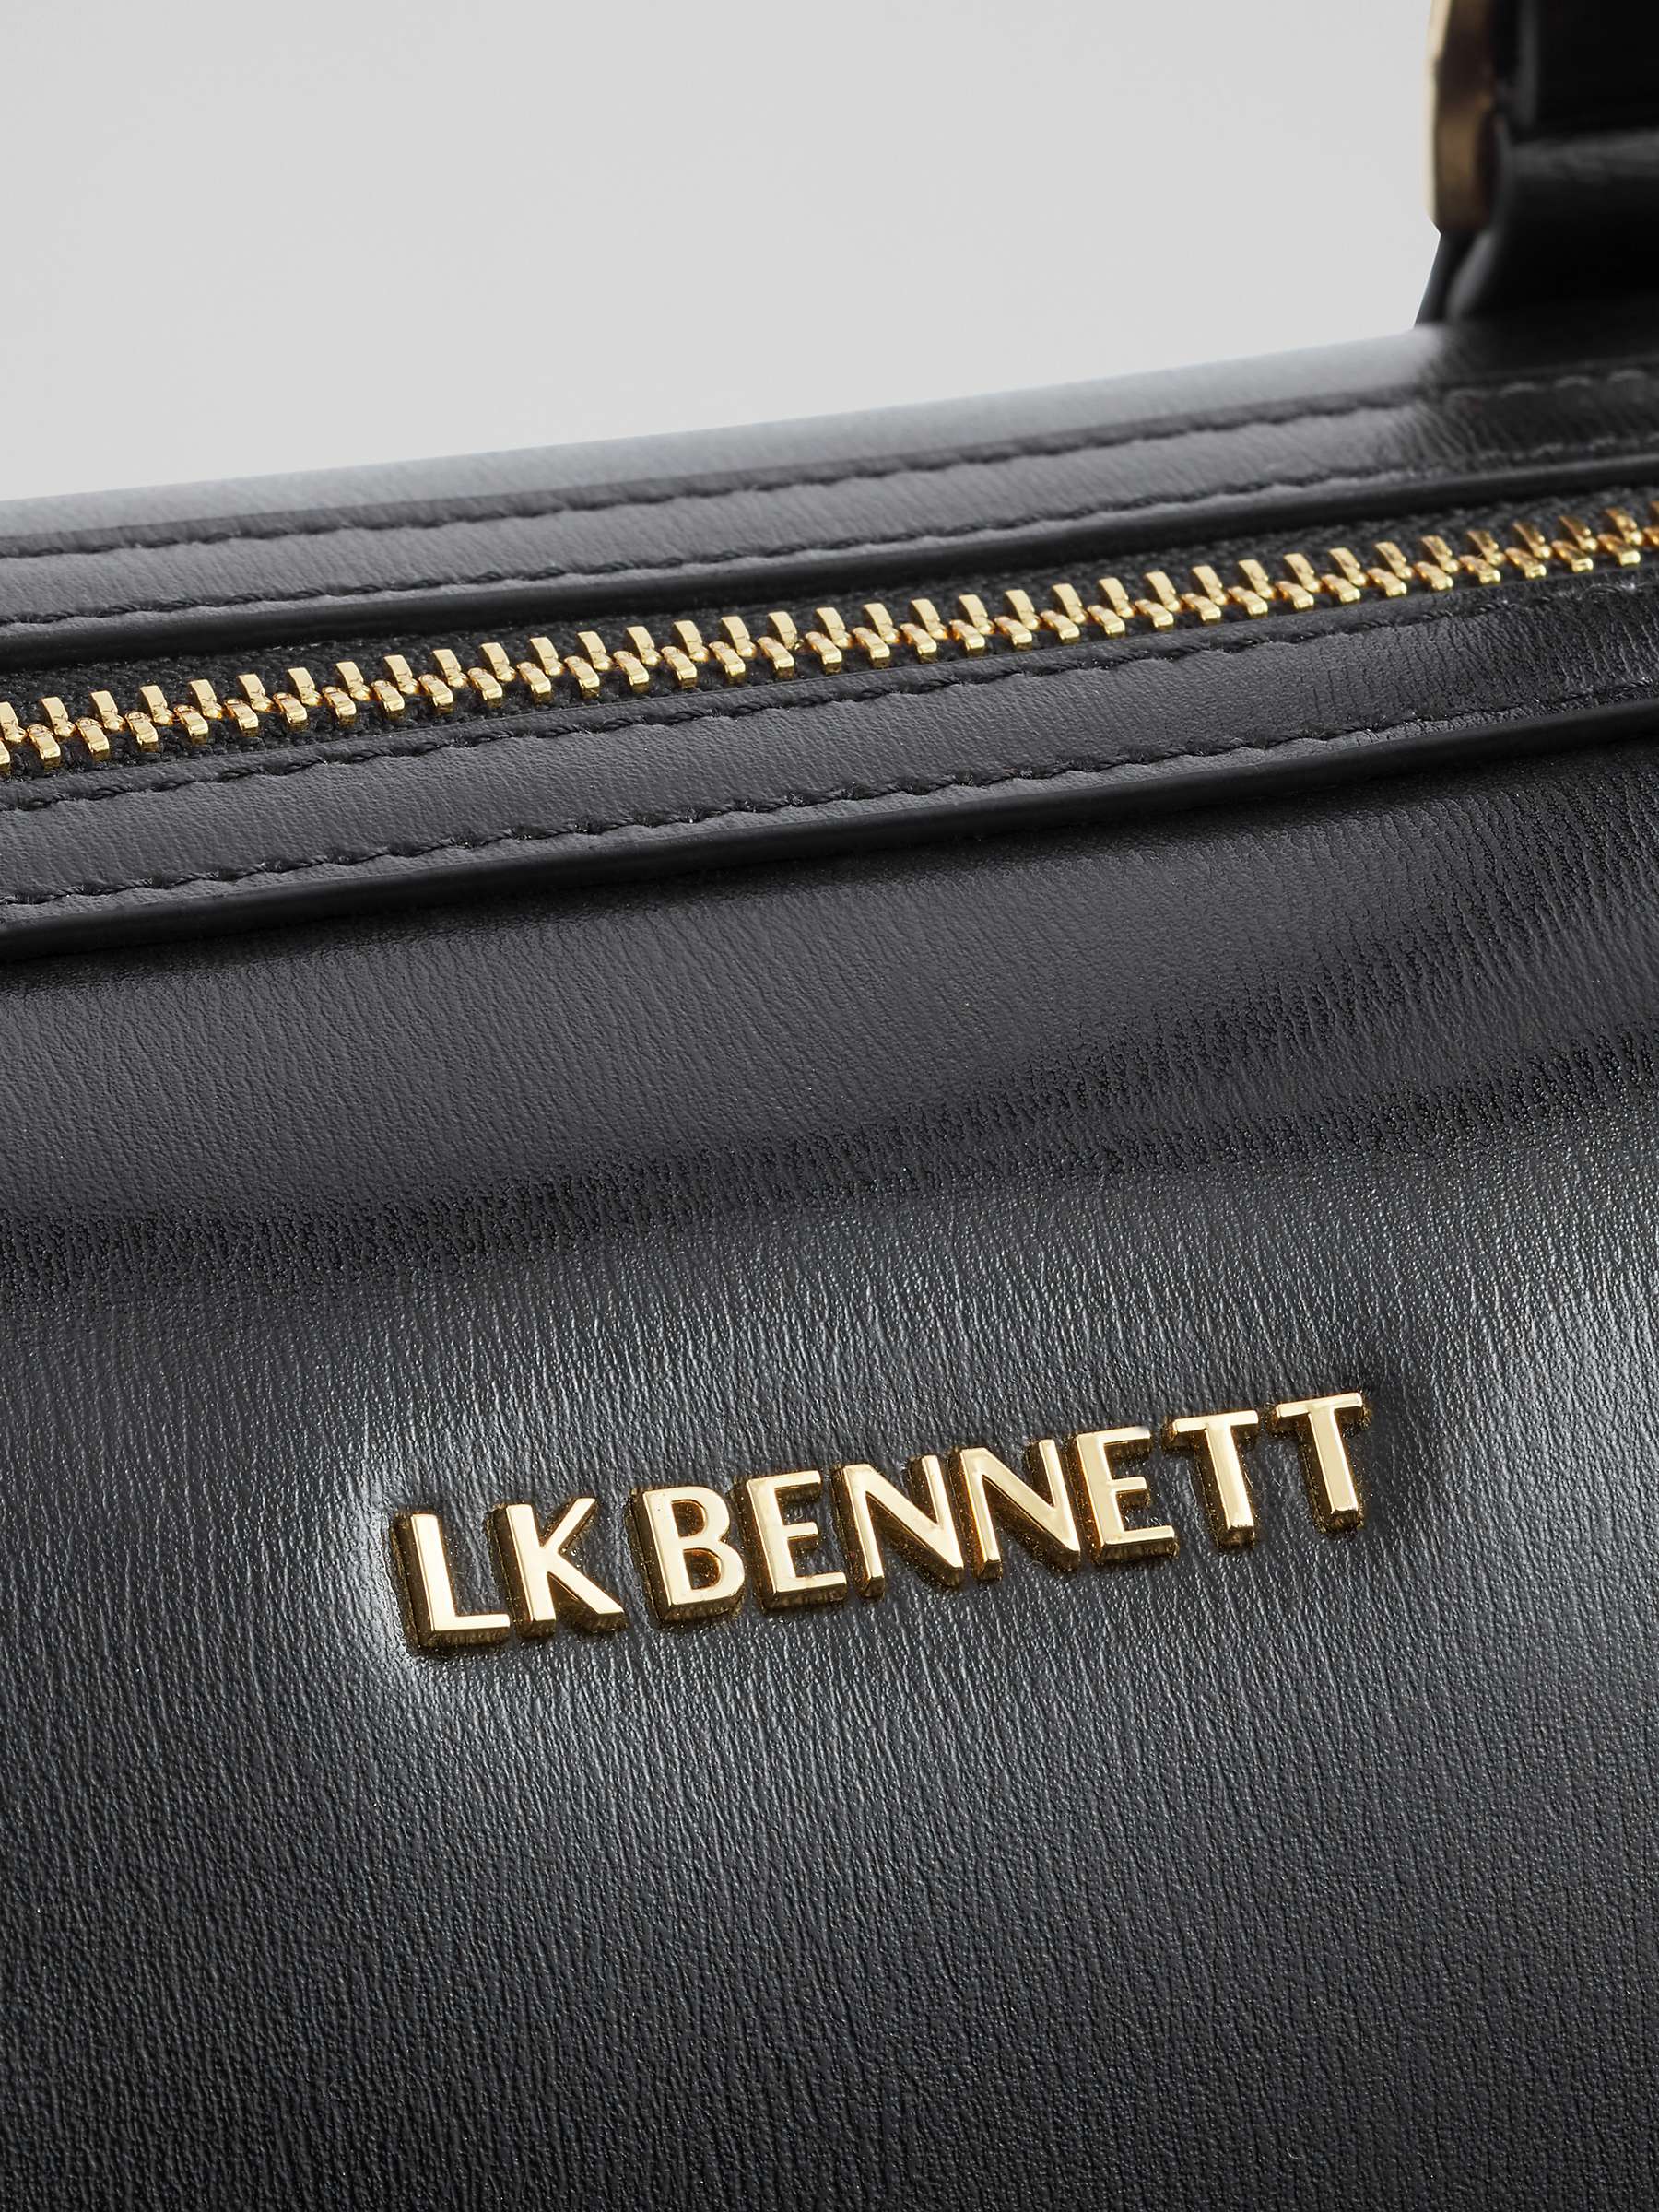 Buy L.K.Bennett Fleur Saffiano Leather Tote, Black Online at johnlewis.com